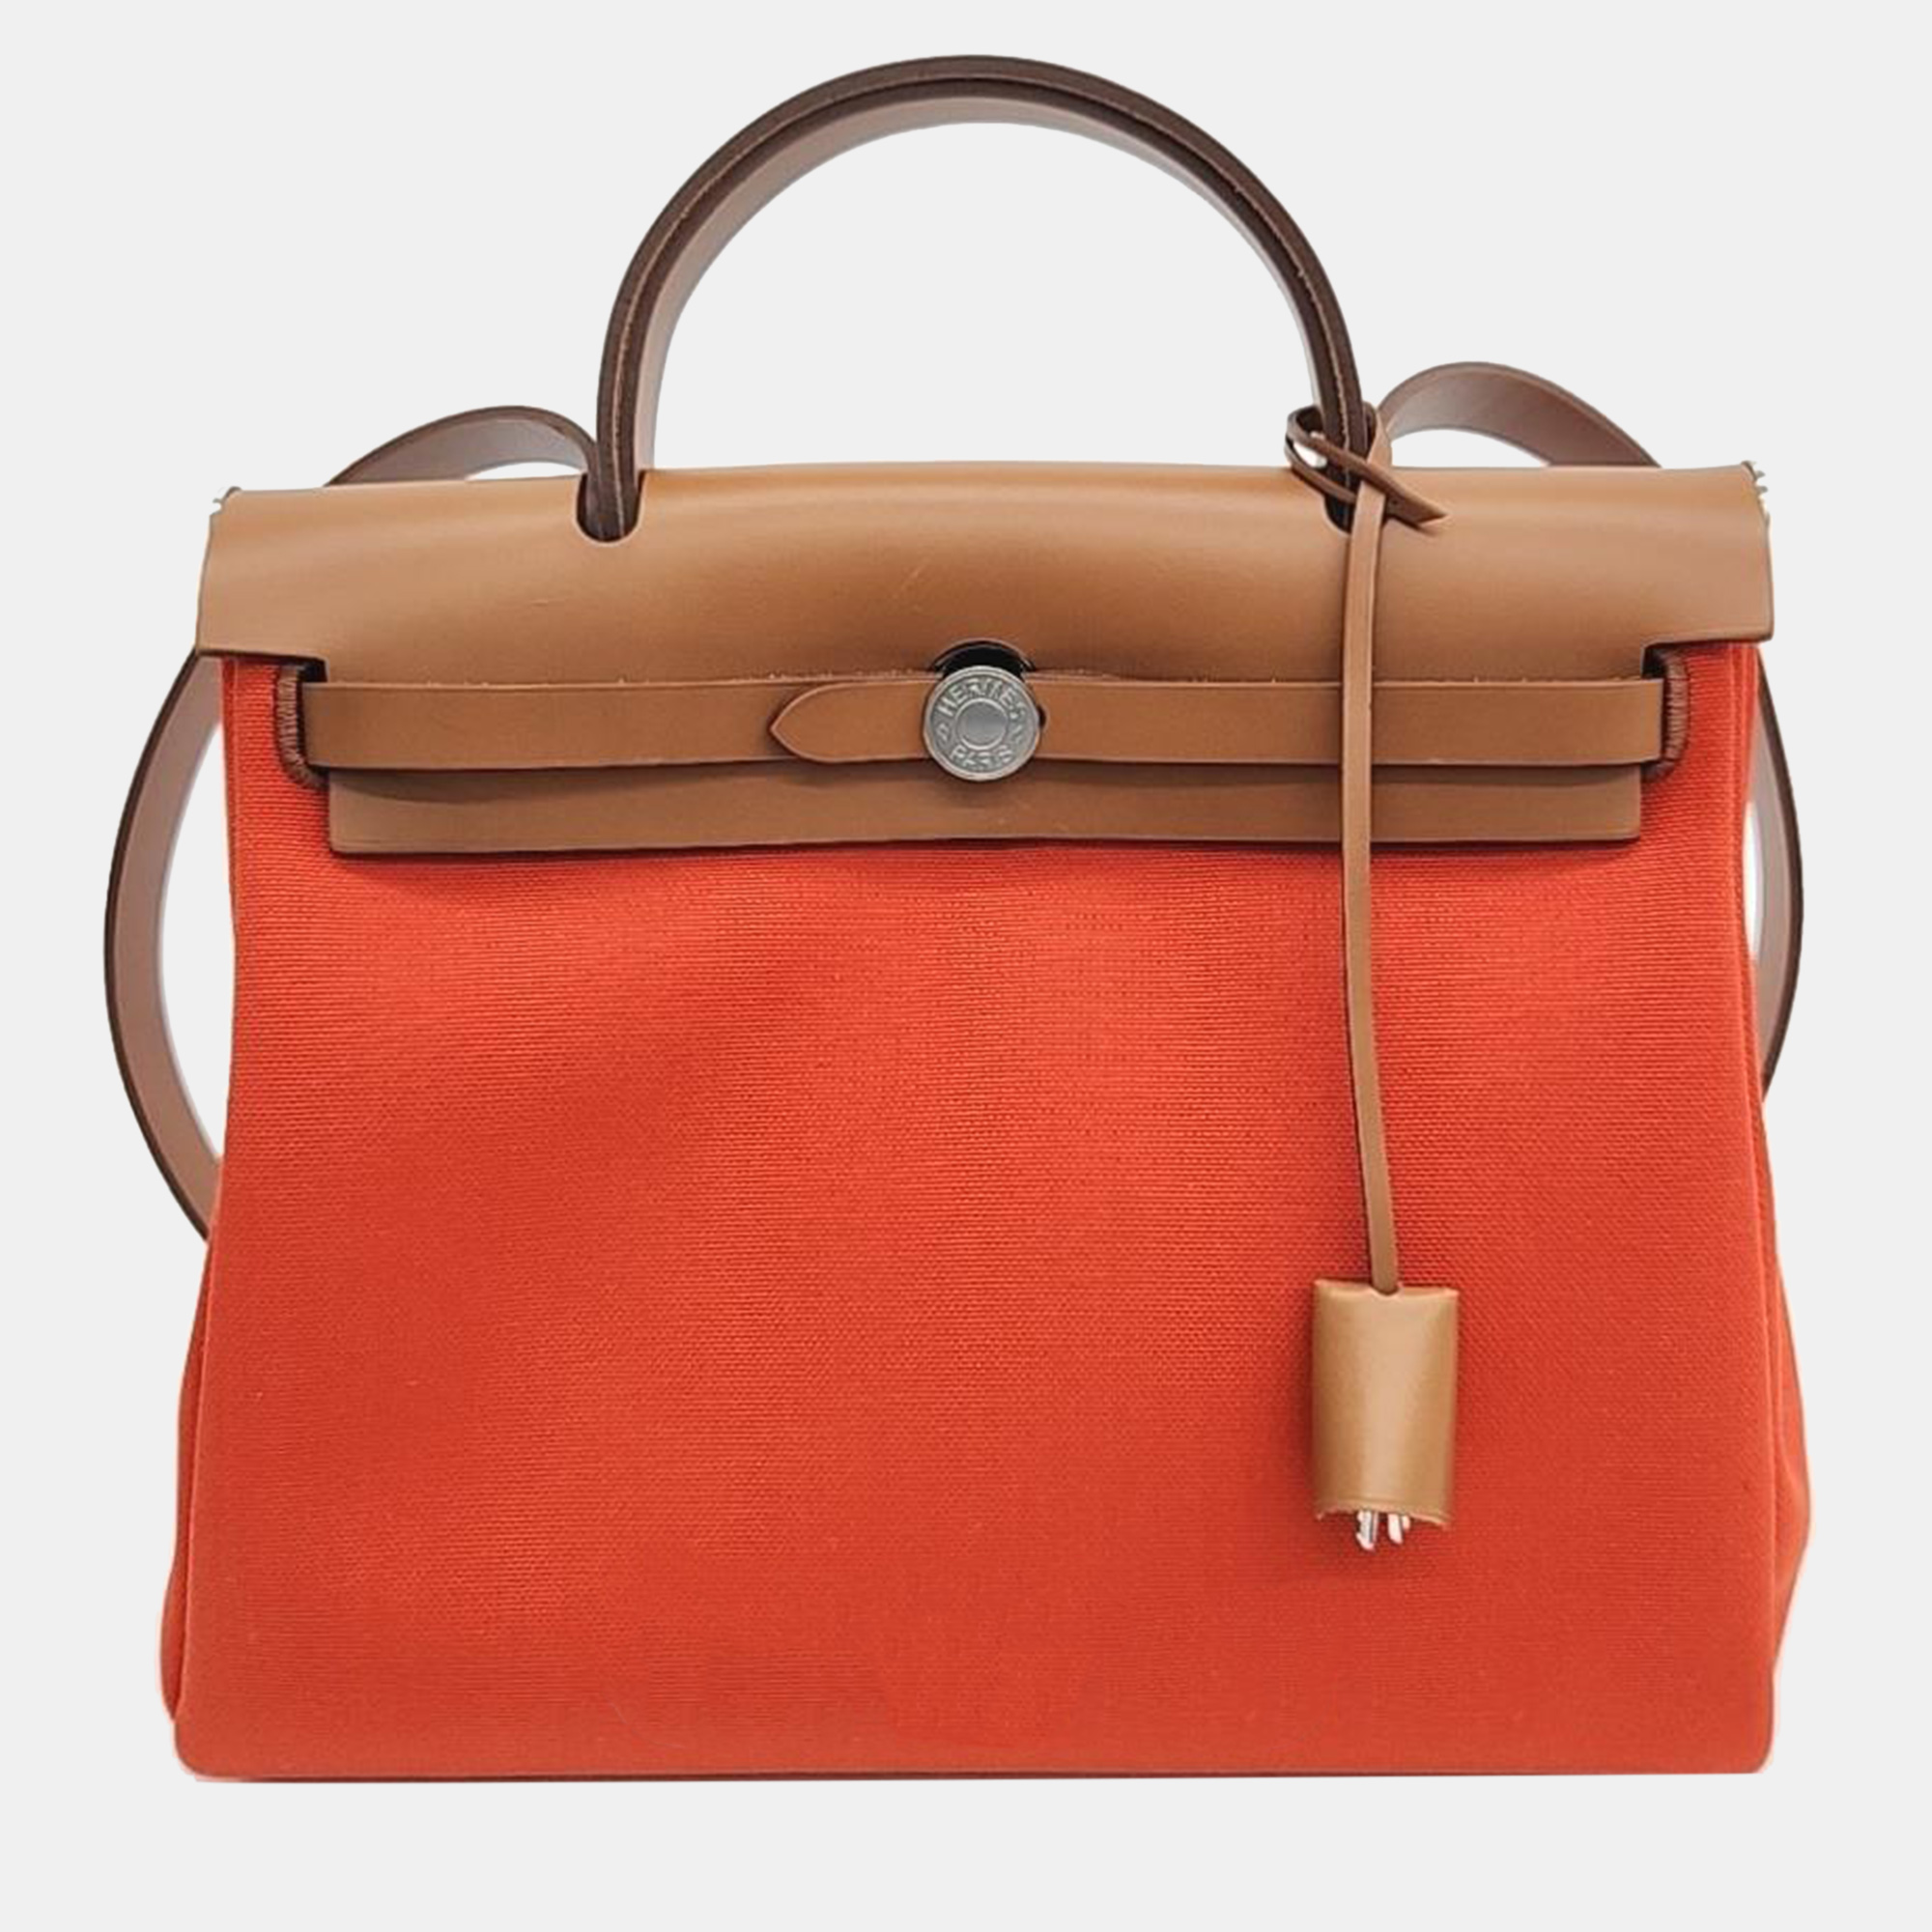 Hermes new zip erbag small handbag